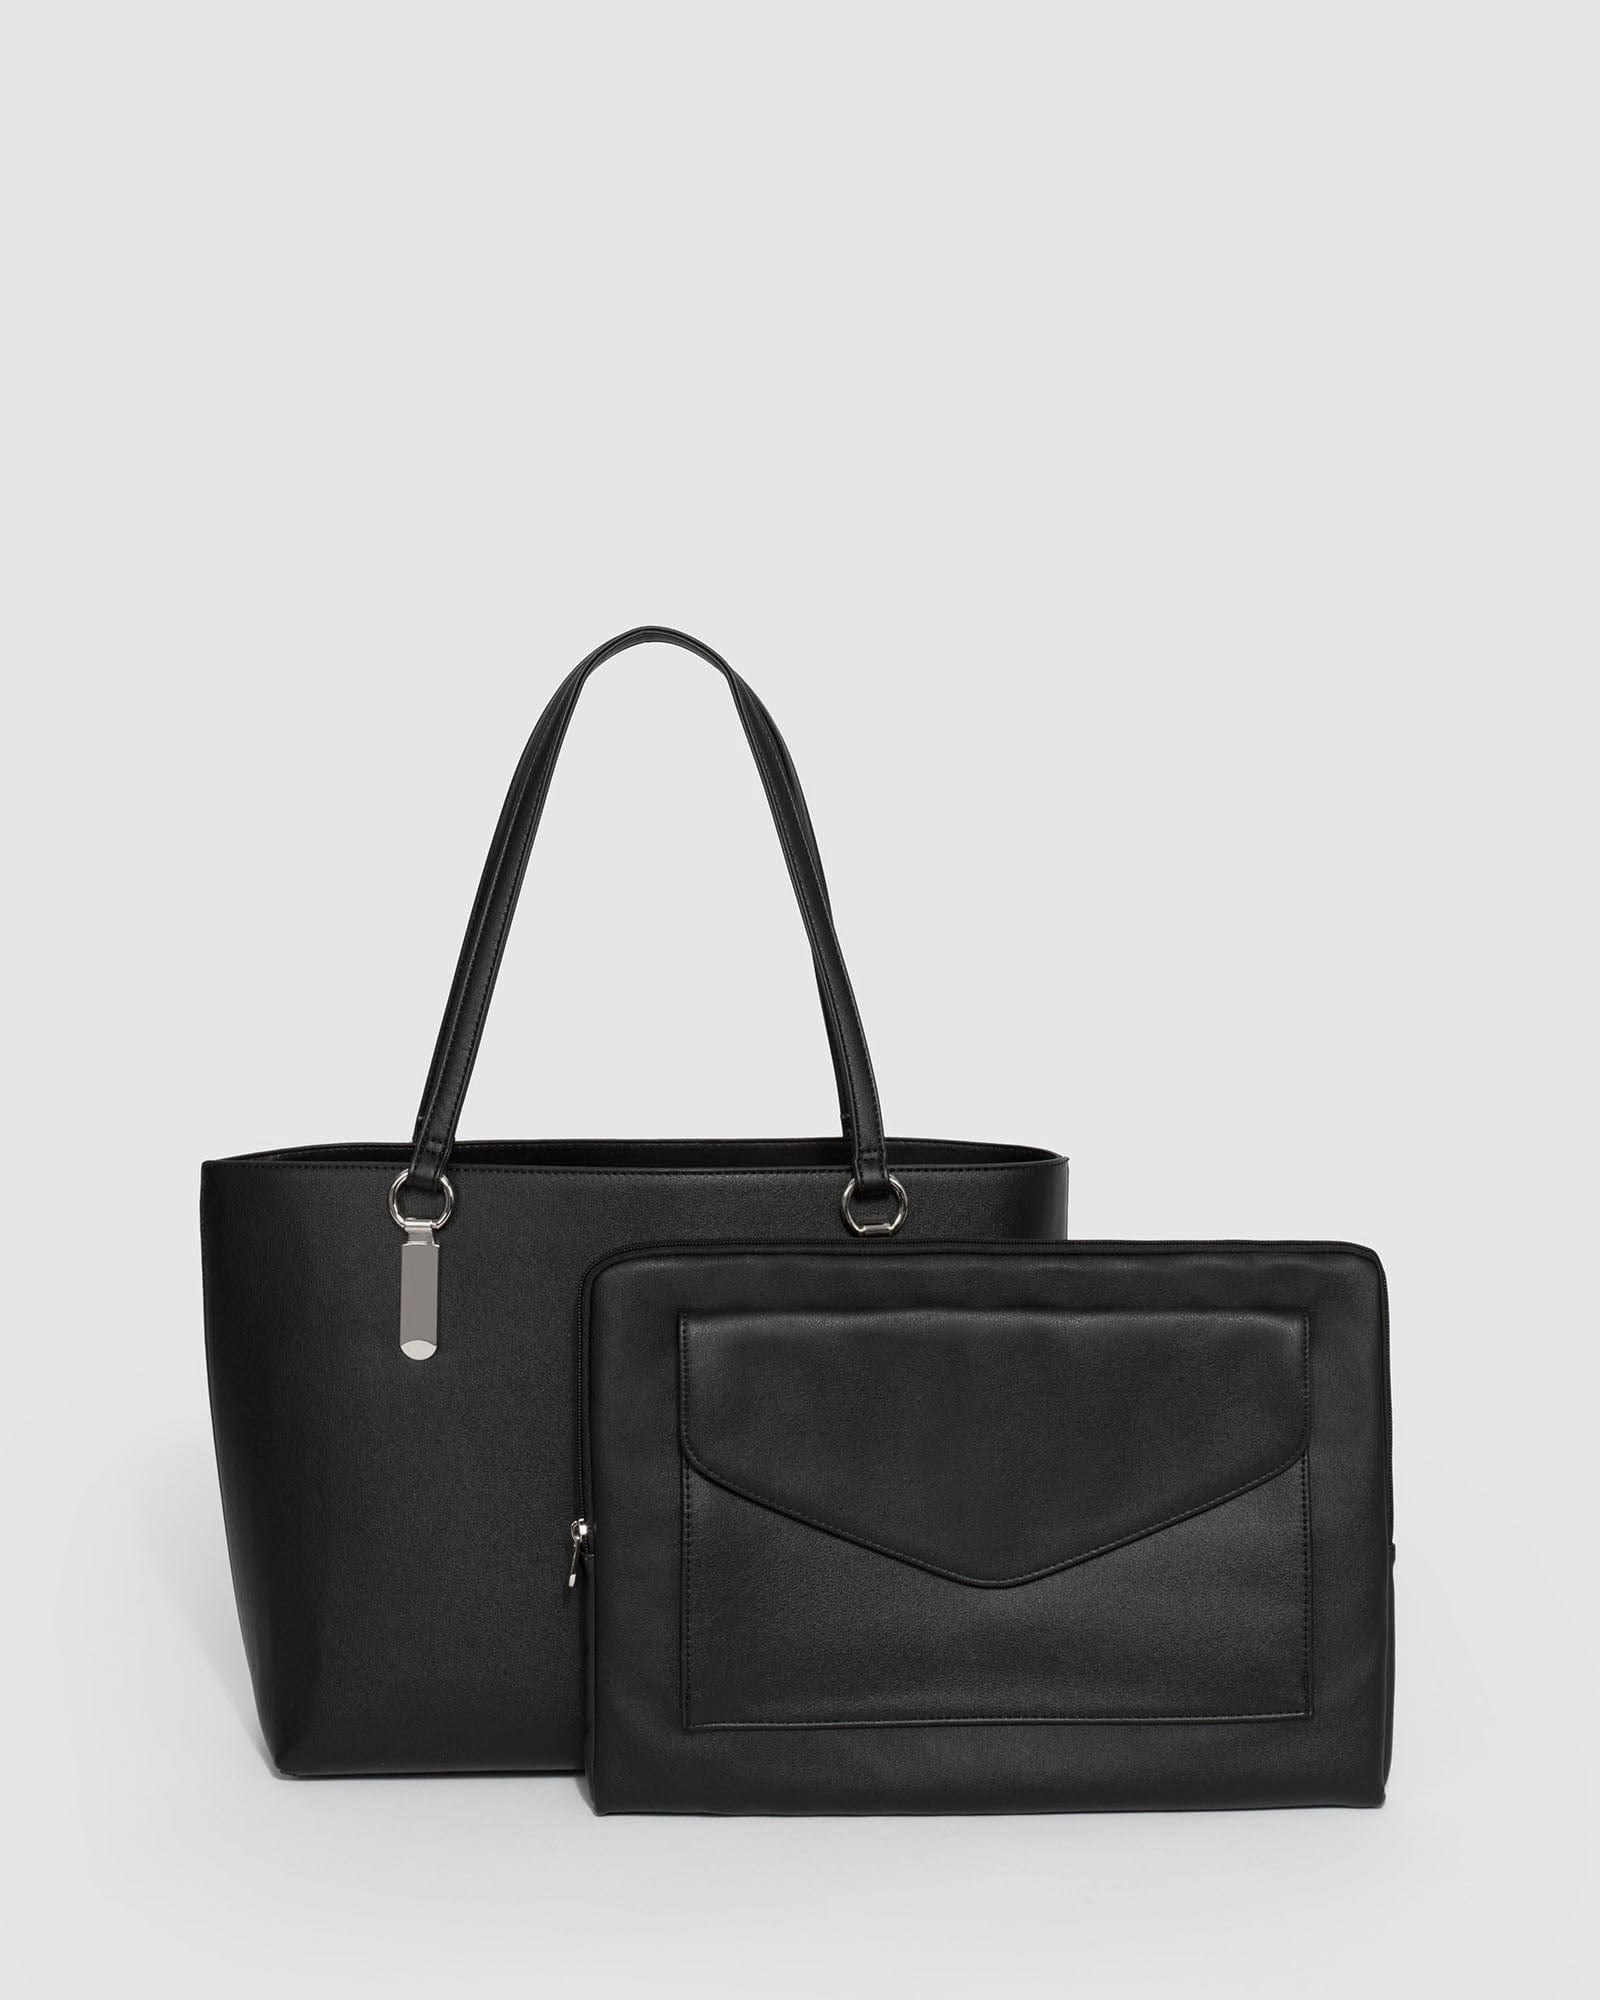 BRAND NEW COLETTE HAYMAN Ada Handbag Black and White with Straps - Free  Postage! | eBay